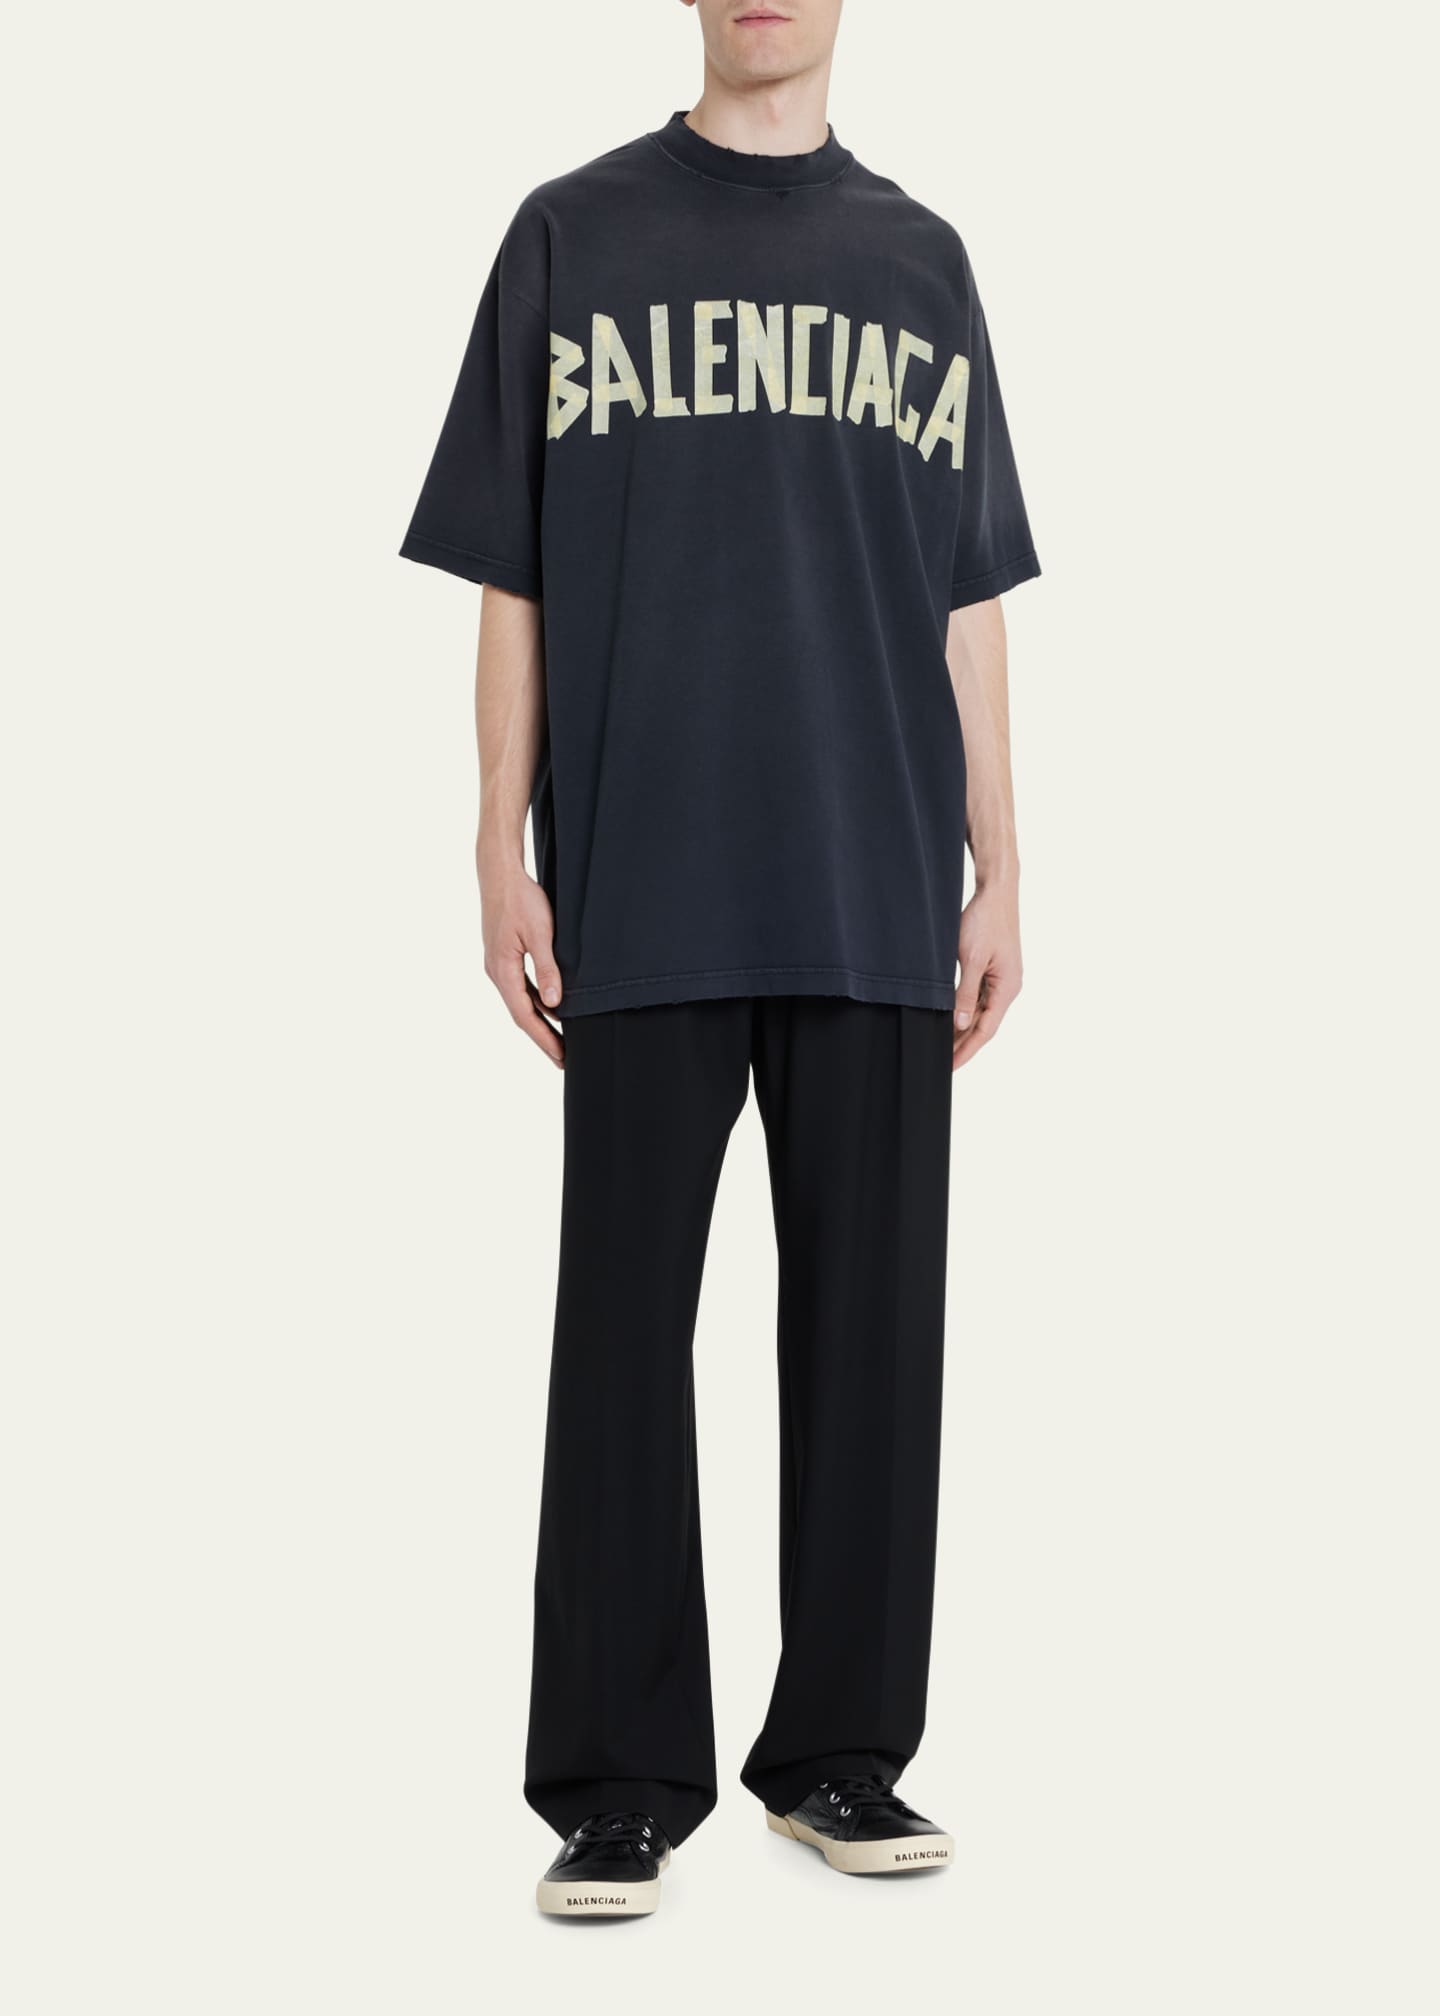 Balenciaga Men's Masking Tape Logo T-Shirt - Bergdorf Goodman